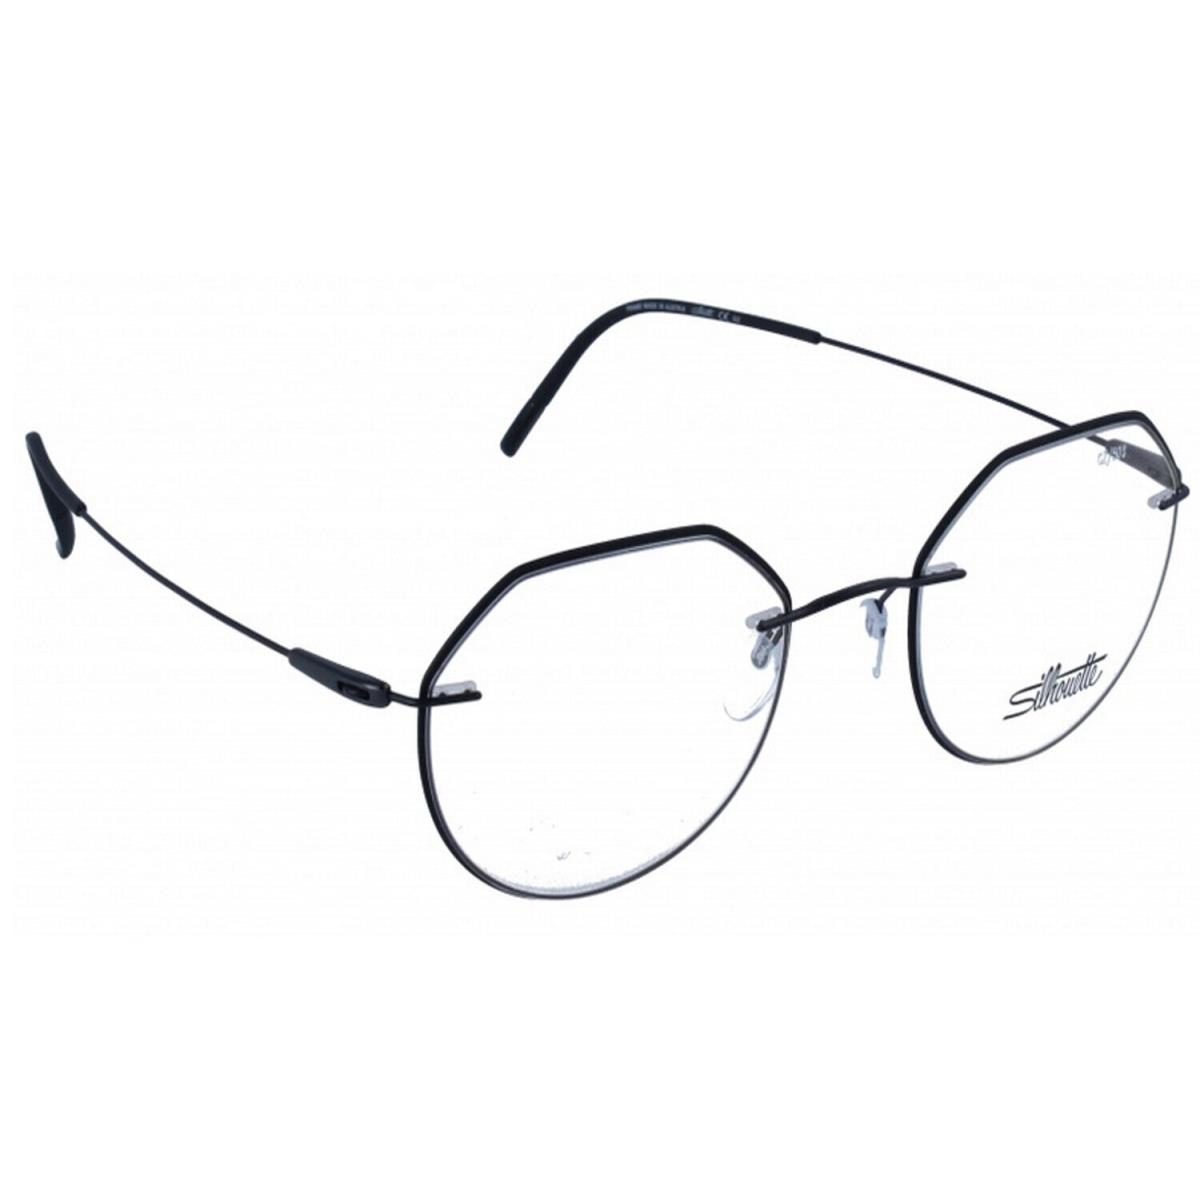 Silhouette Eyeglasses Dynamics Colorwave 50/21/150 Black 5500/GZ-9240